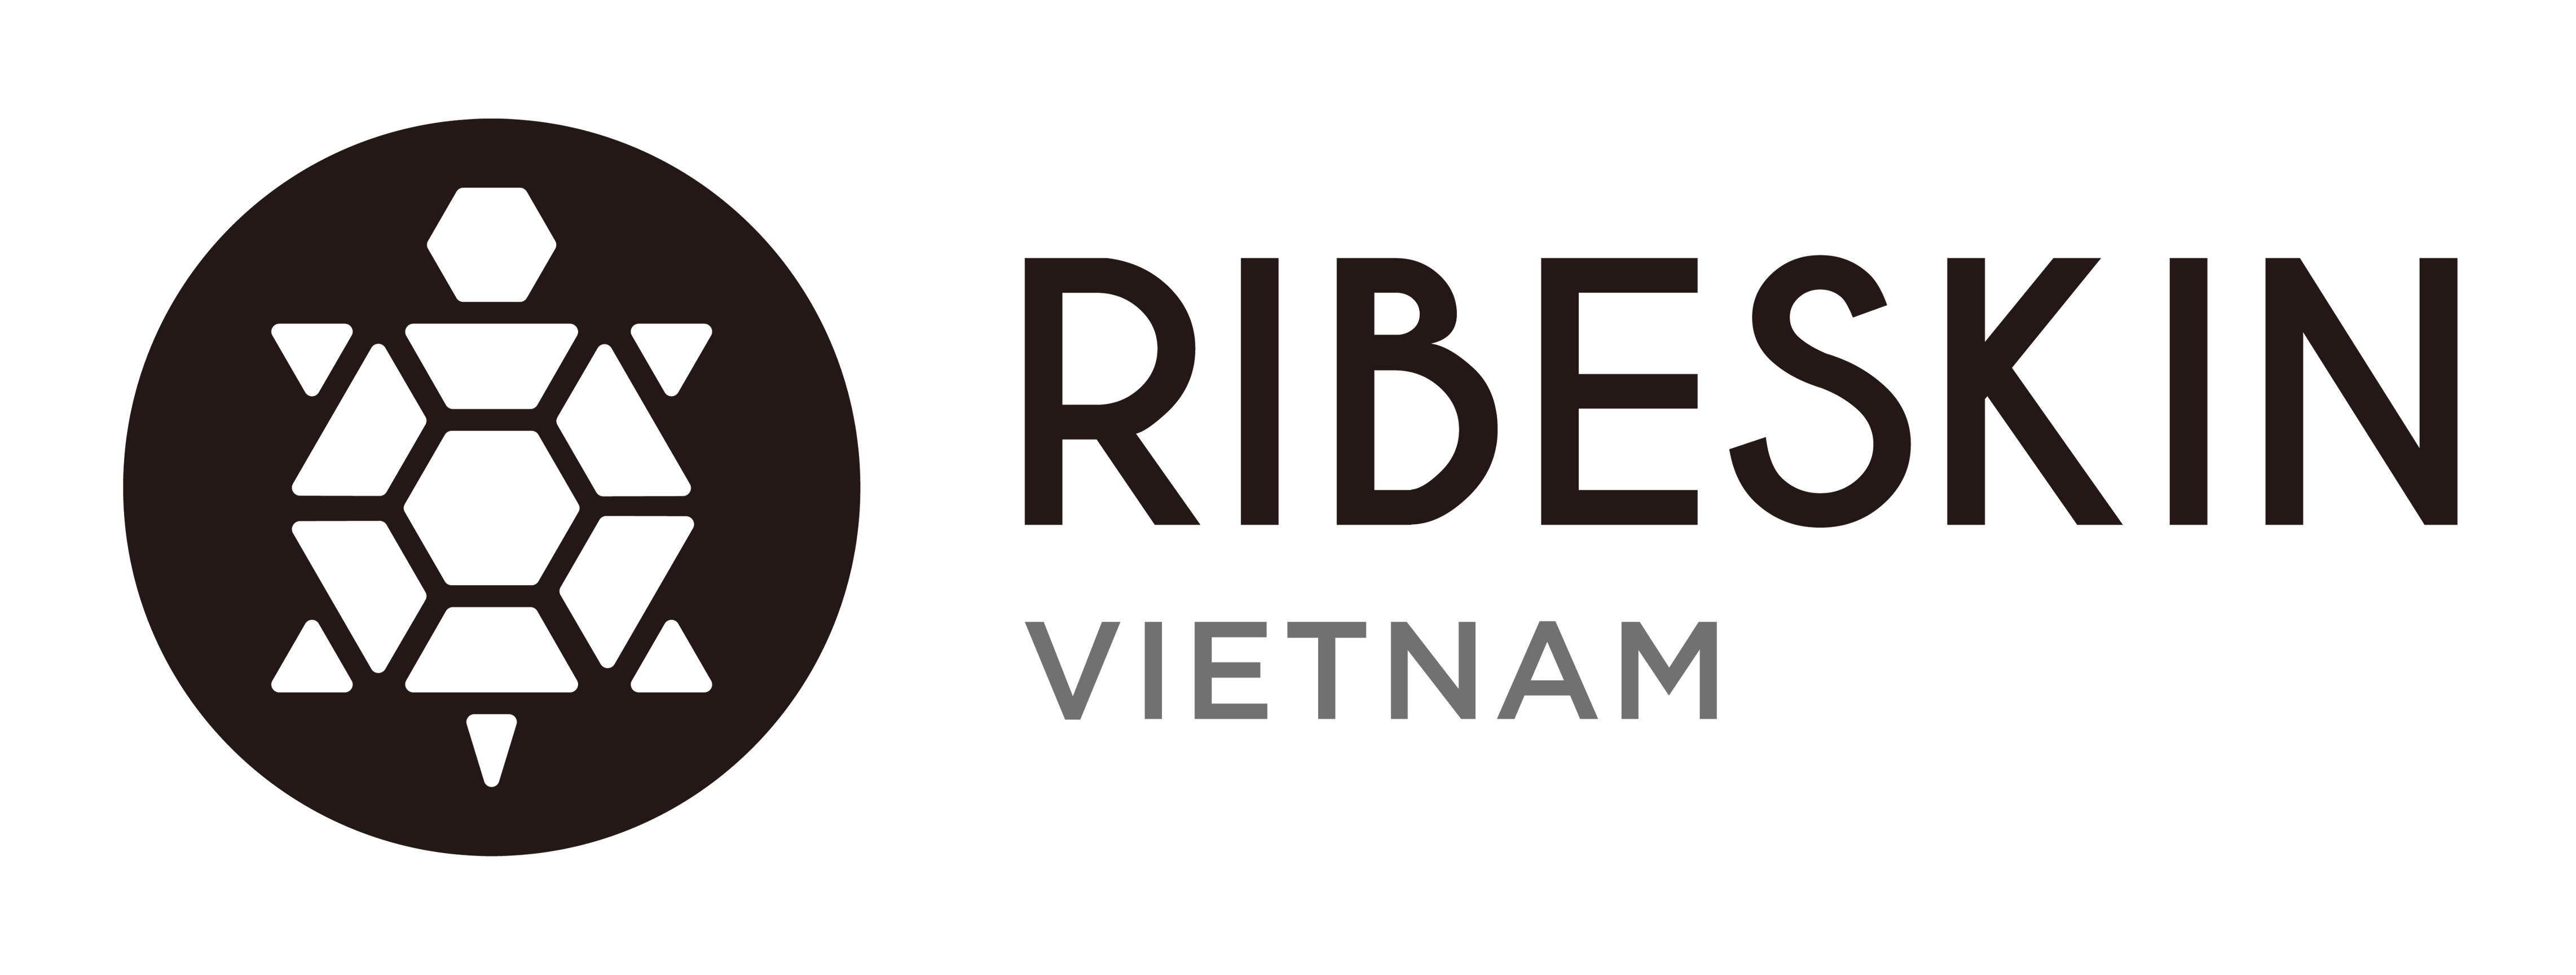 Ribeskin Vietnam